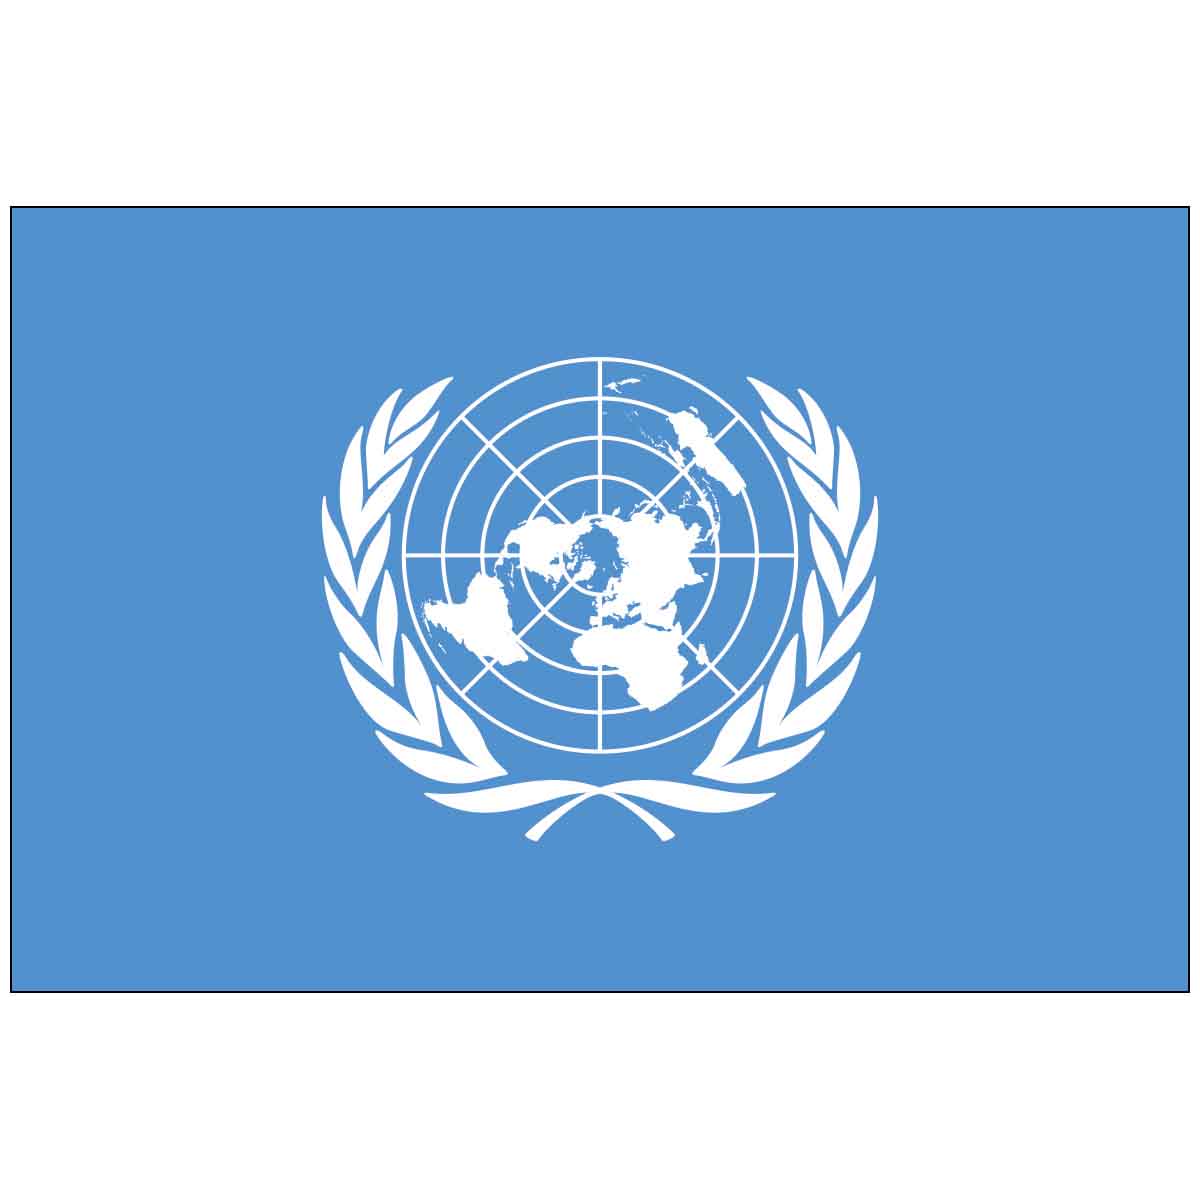 3' x 5' United Nations World Flag - e-poly